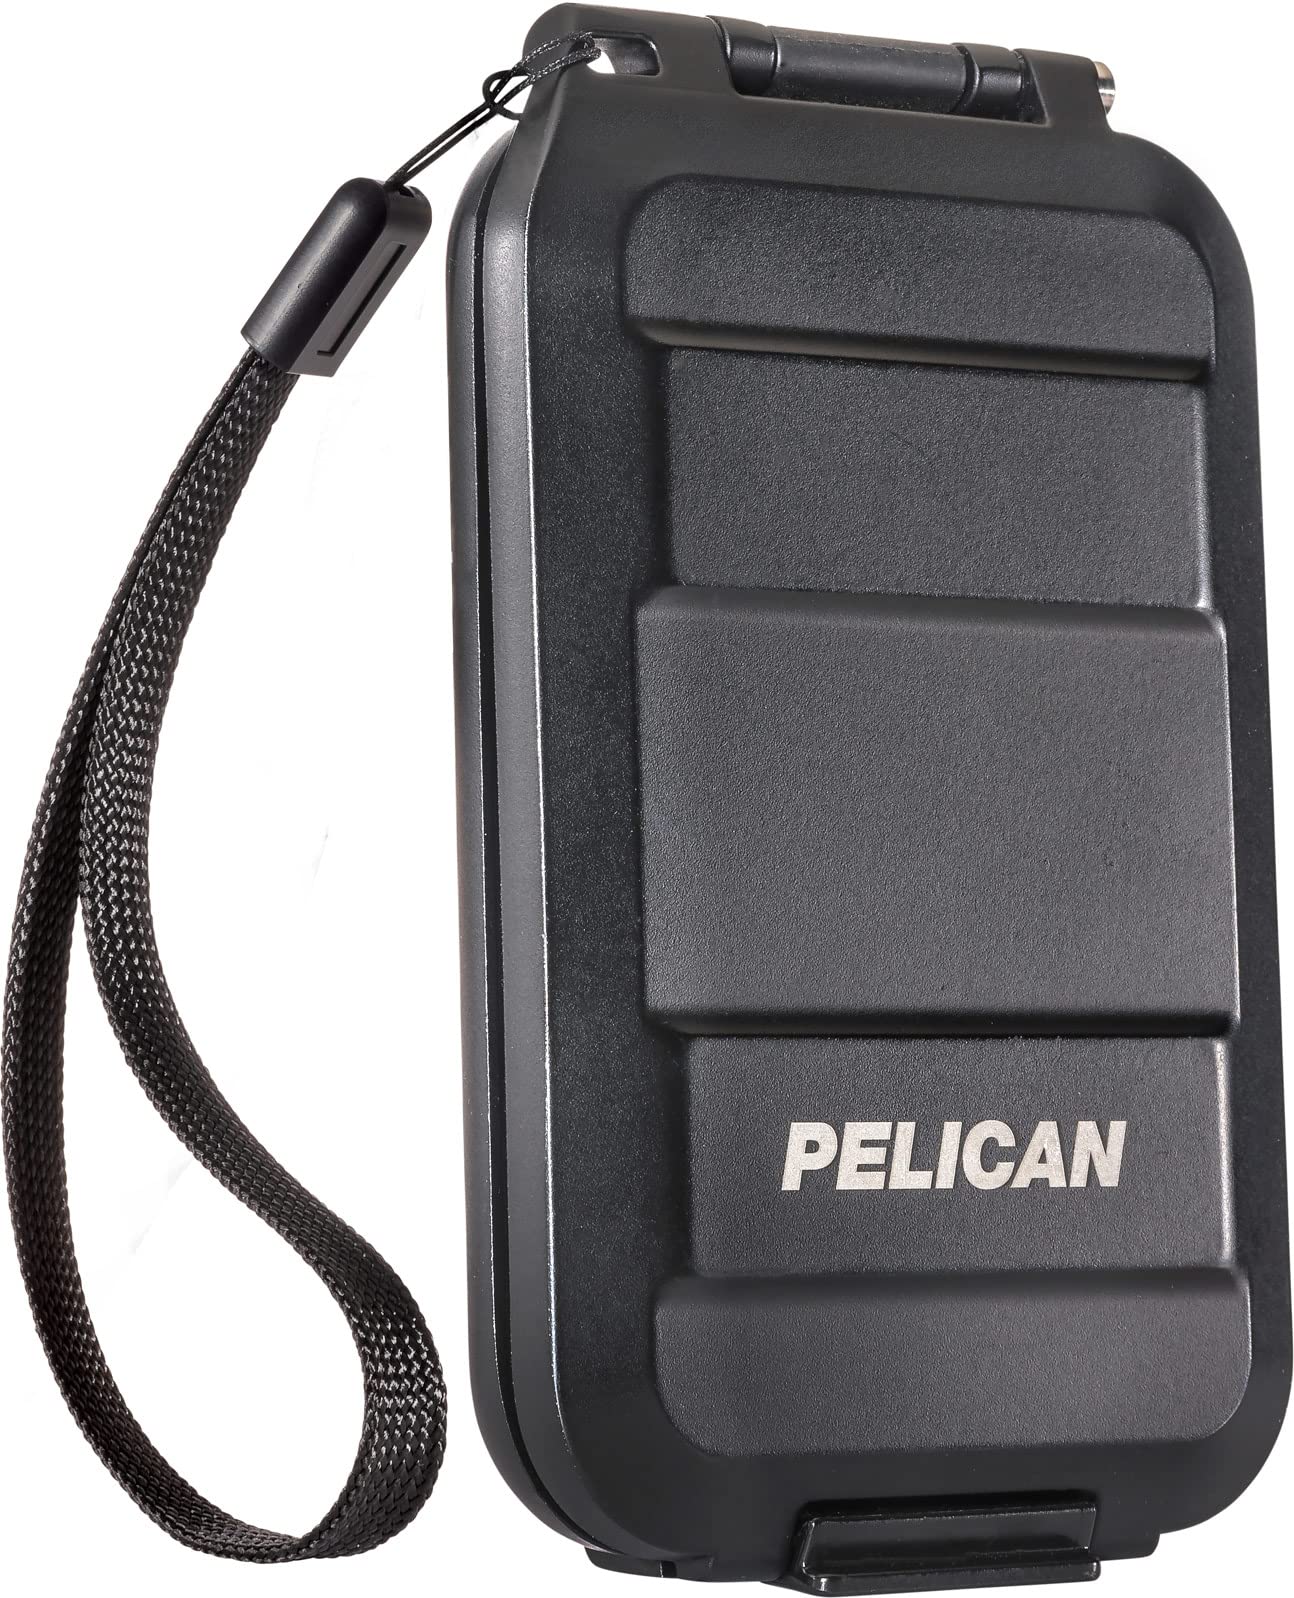 Pelican Wallet - G5 Personal Utility RFID Blocking Field Wallet